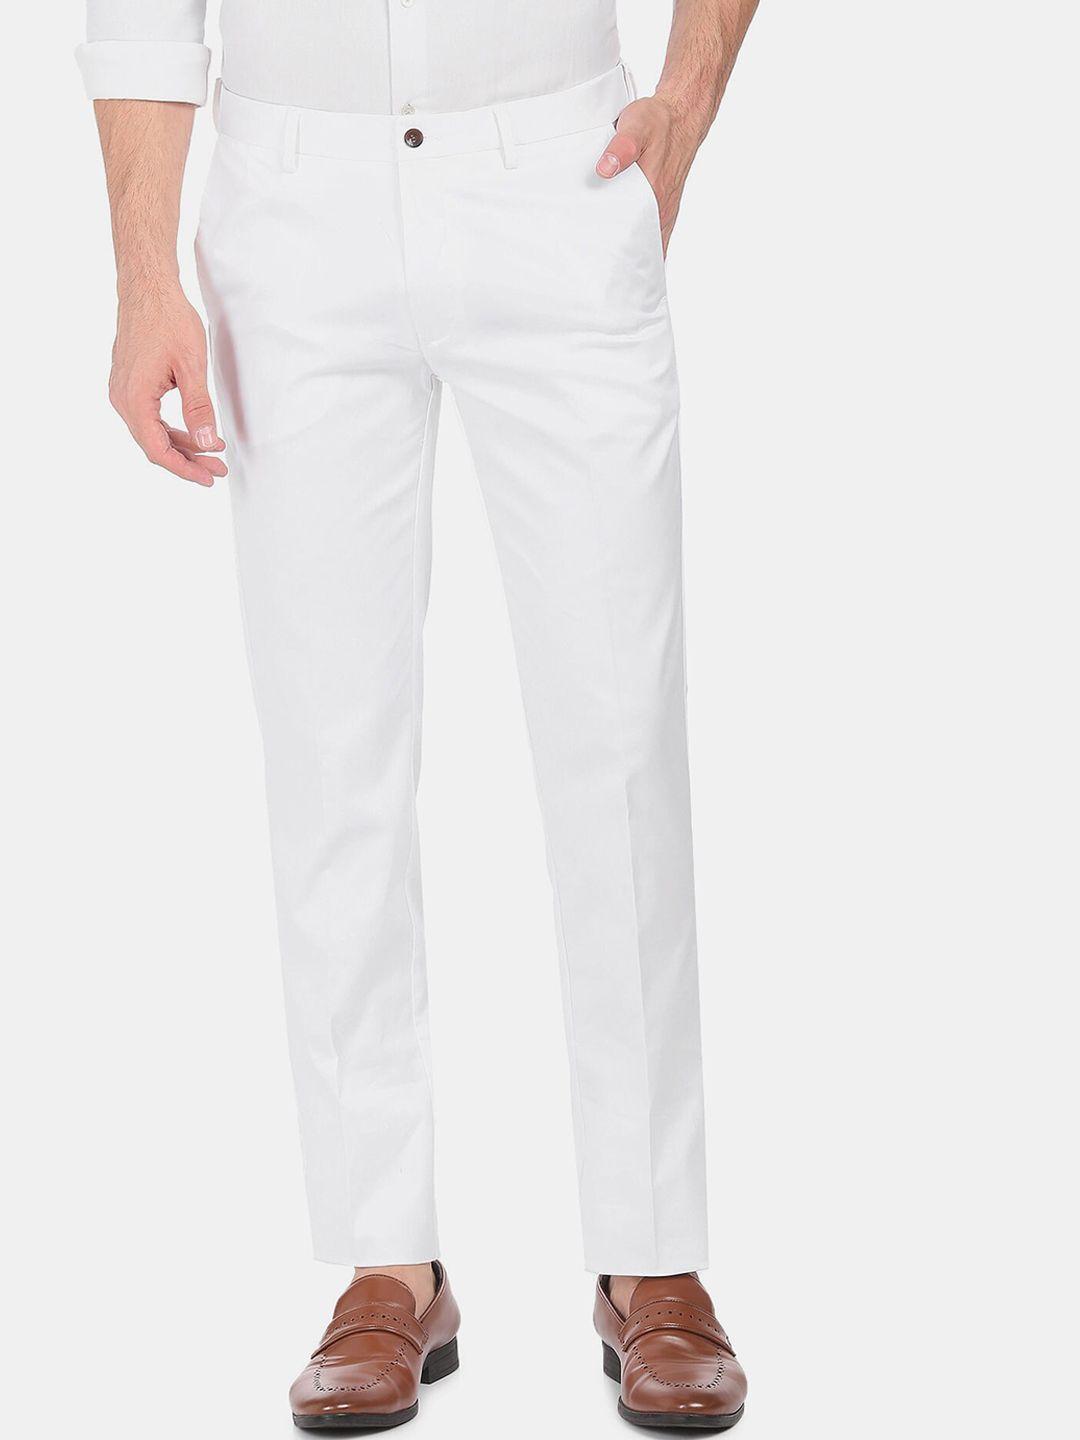 arrow-men-white-trousers